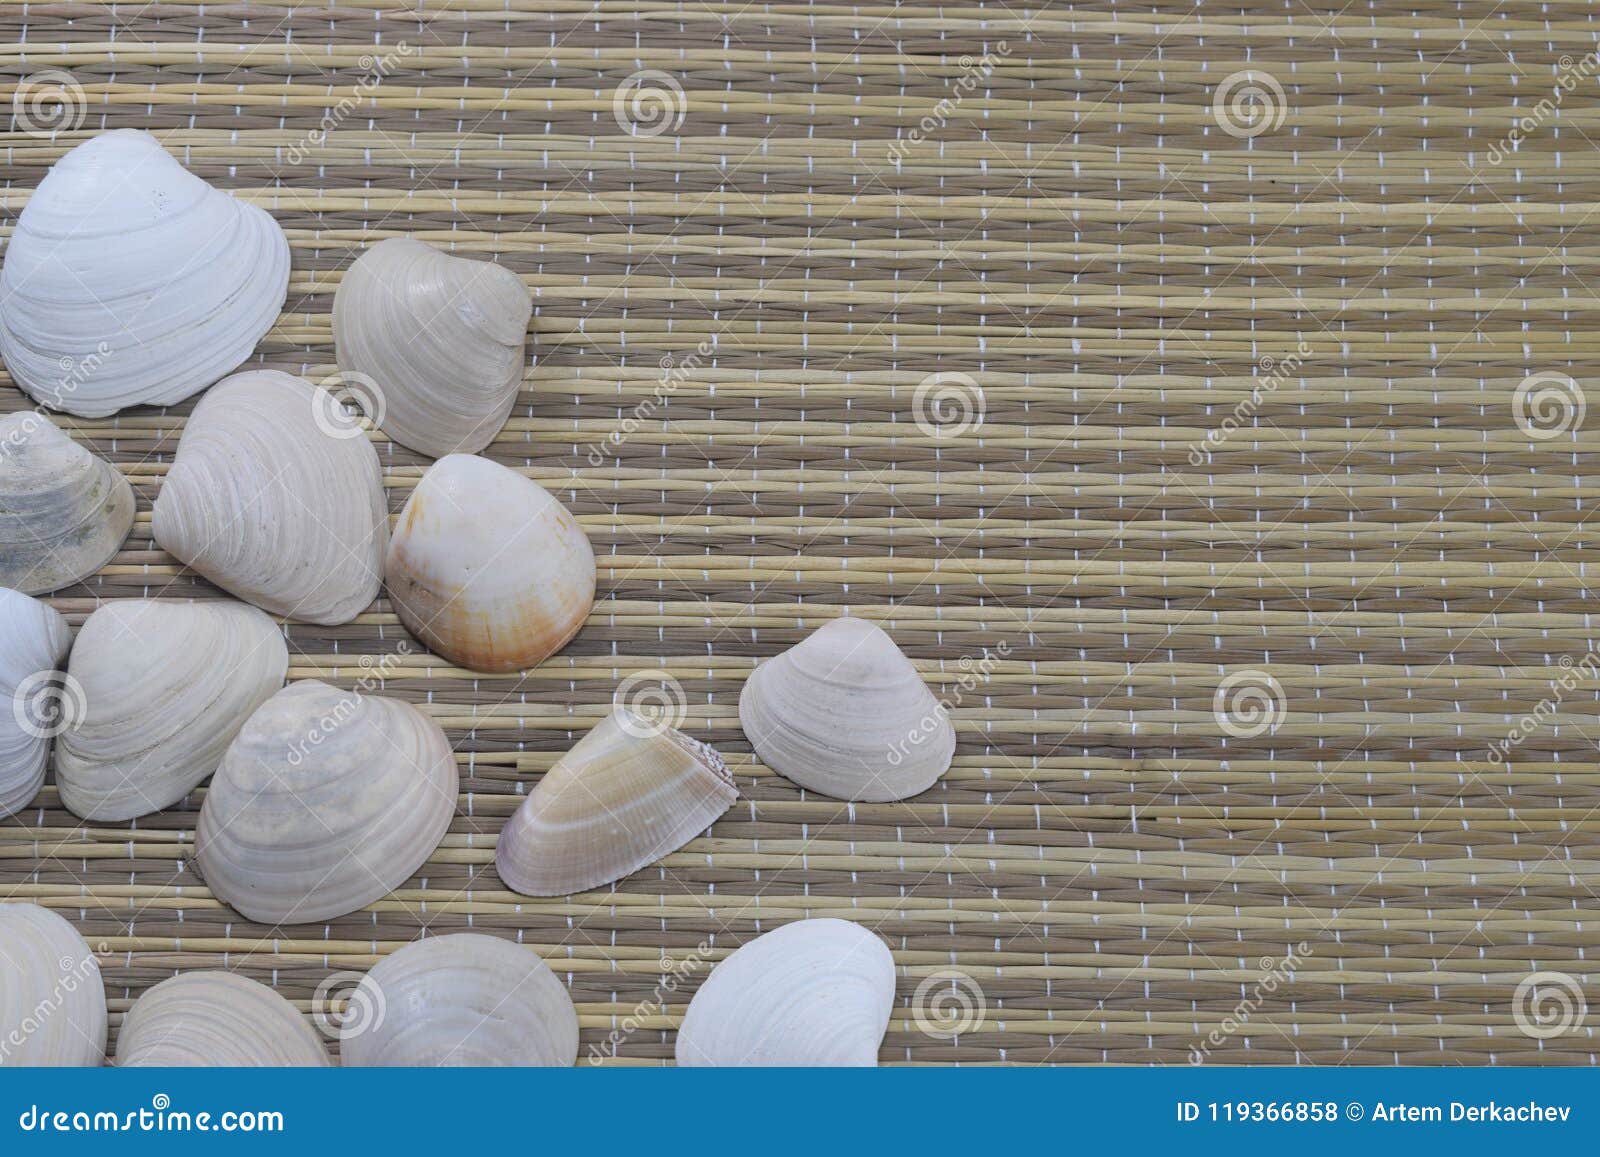 vacaciones, seashells lie on the beach cover